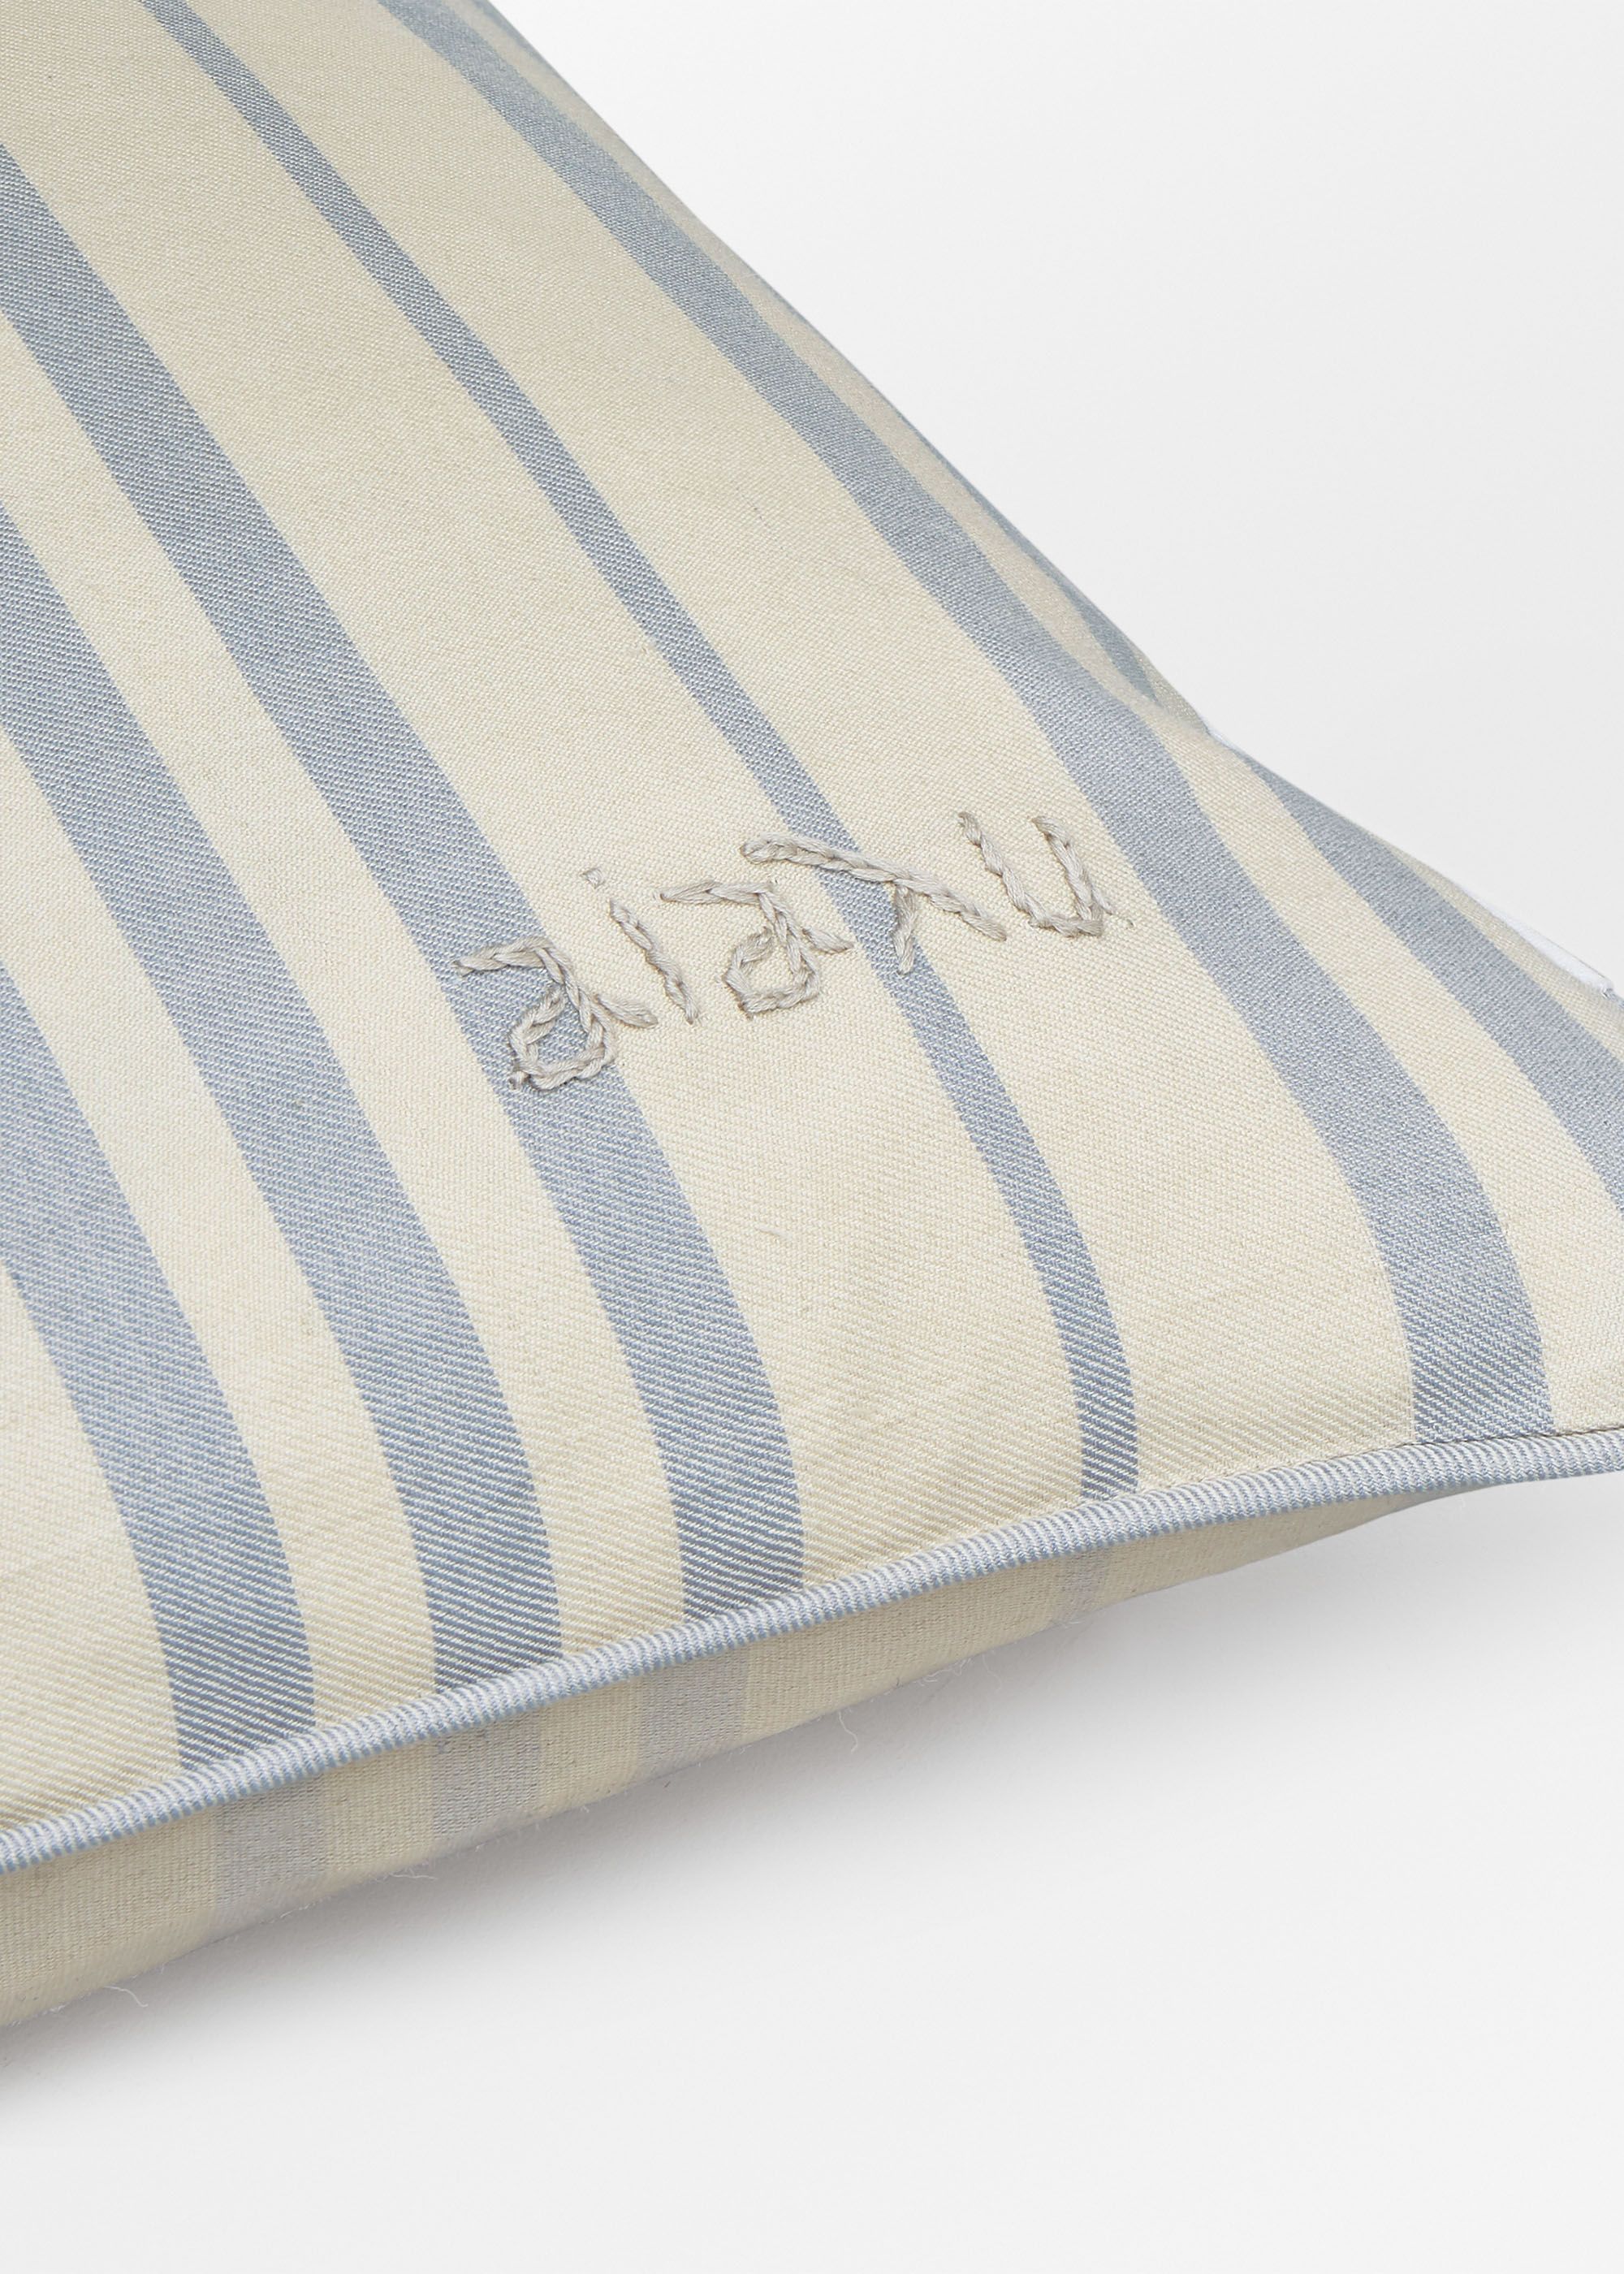 Cushions - Marking Silk Pillow (40x60)